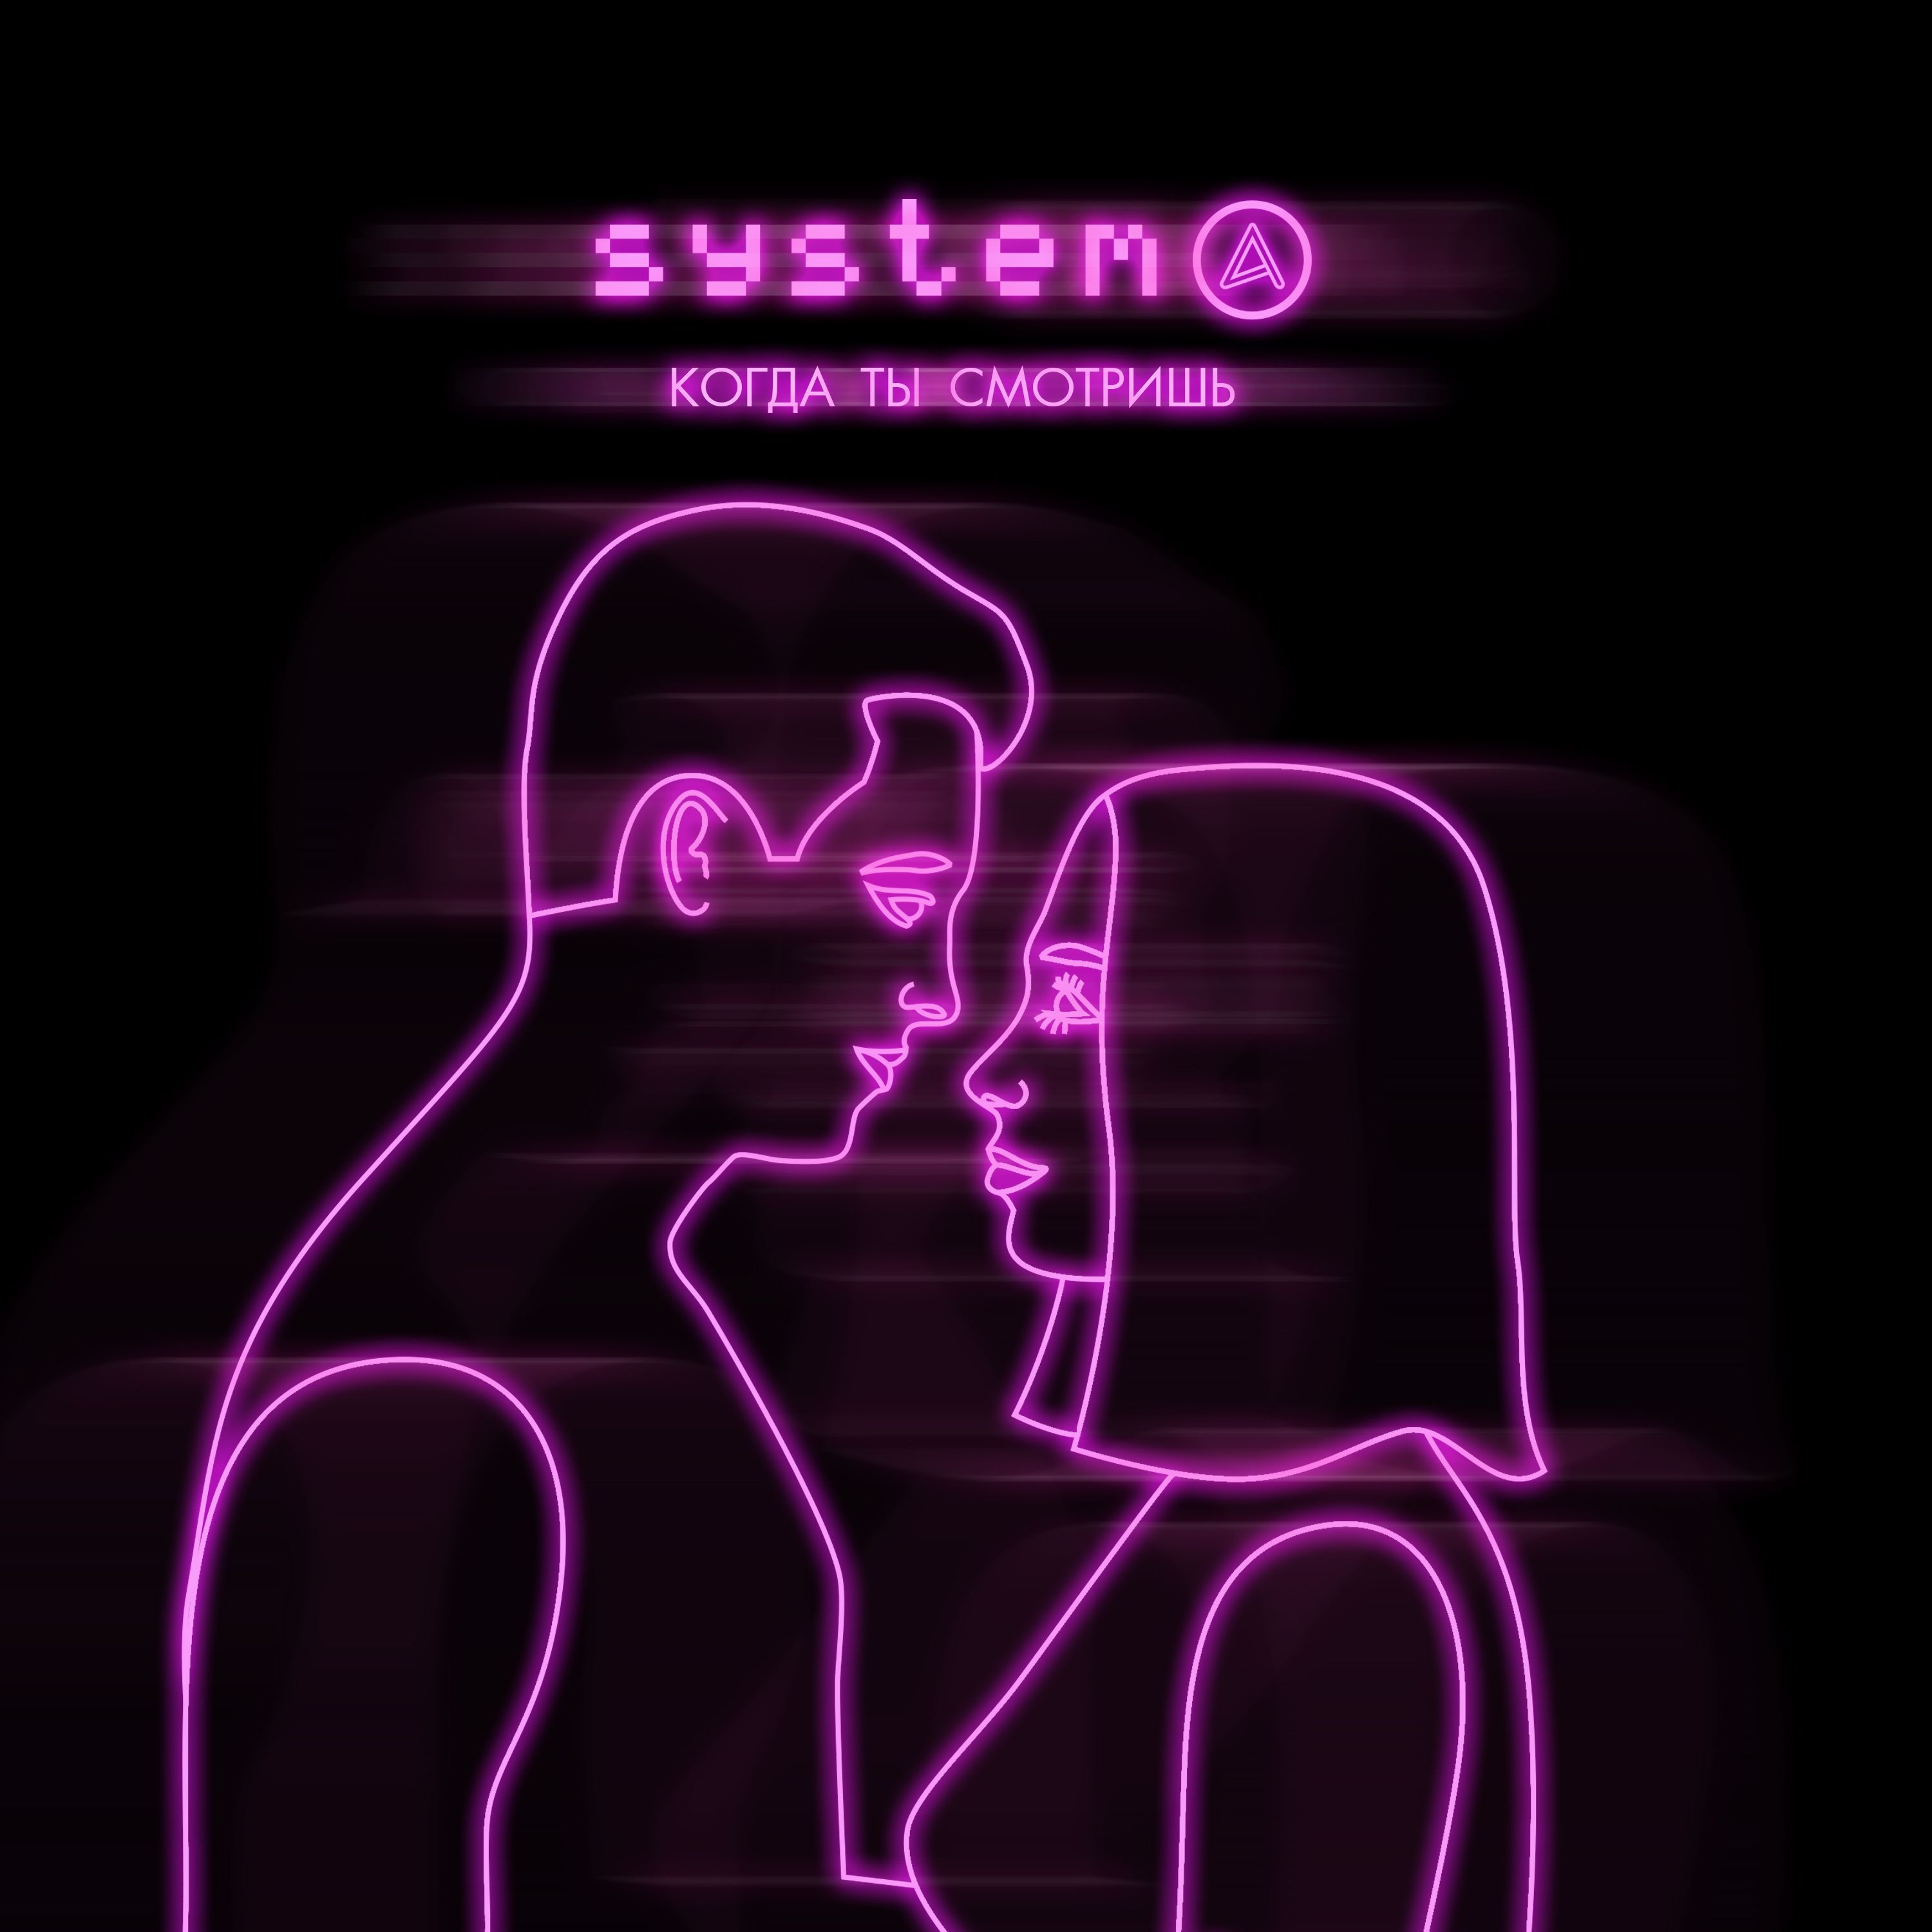 Download Systema - Когда ты смотришь